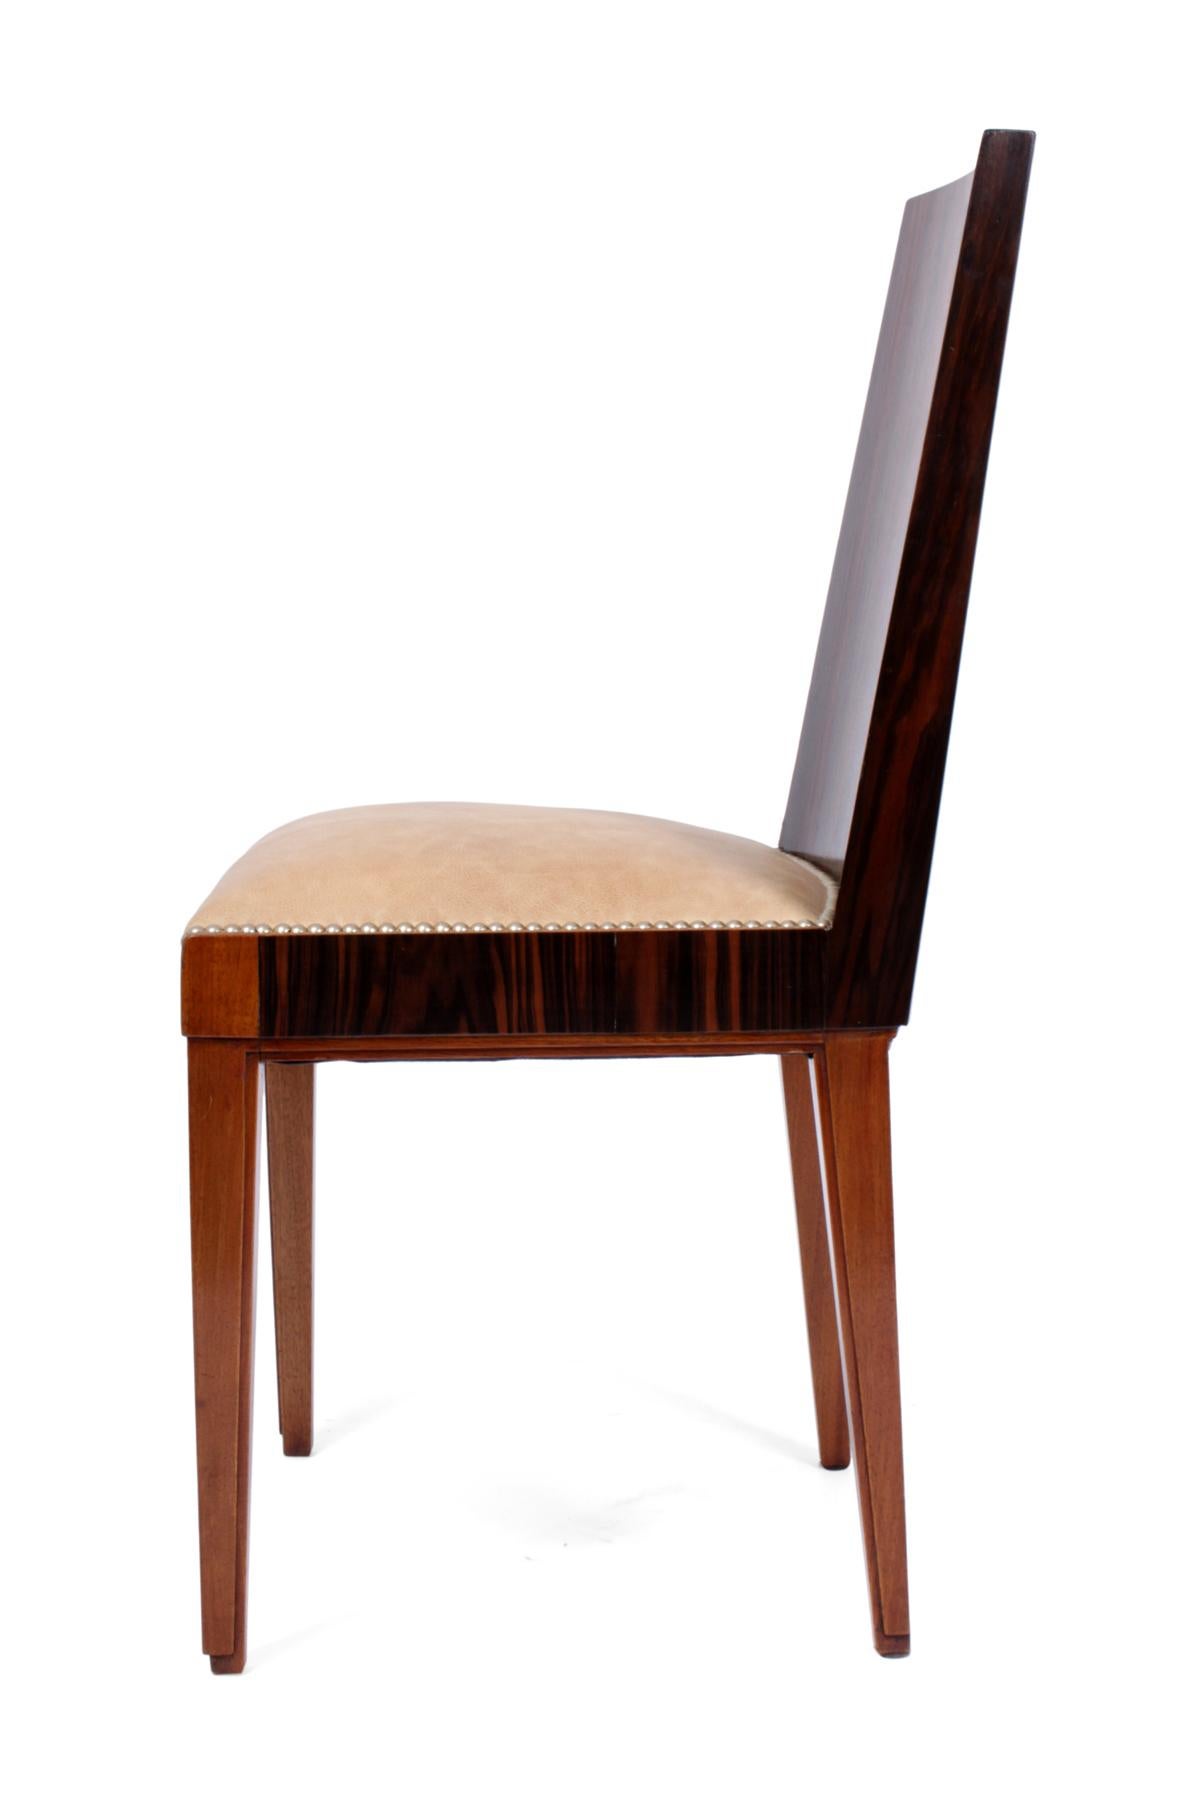 Art Deco Macassar Ebony Dining Chairs For Sale 2